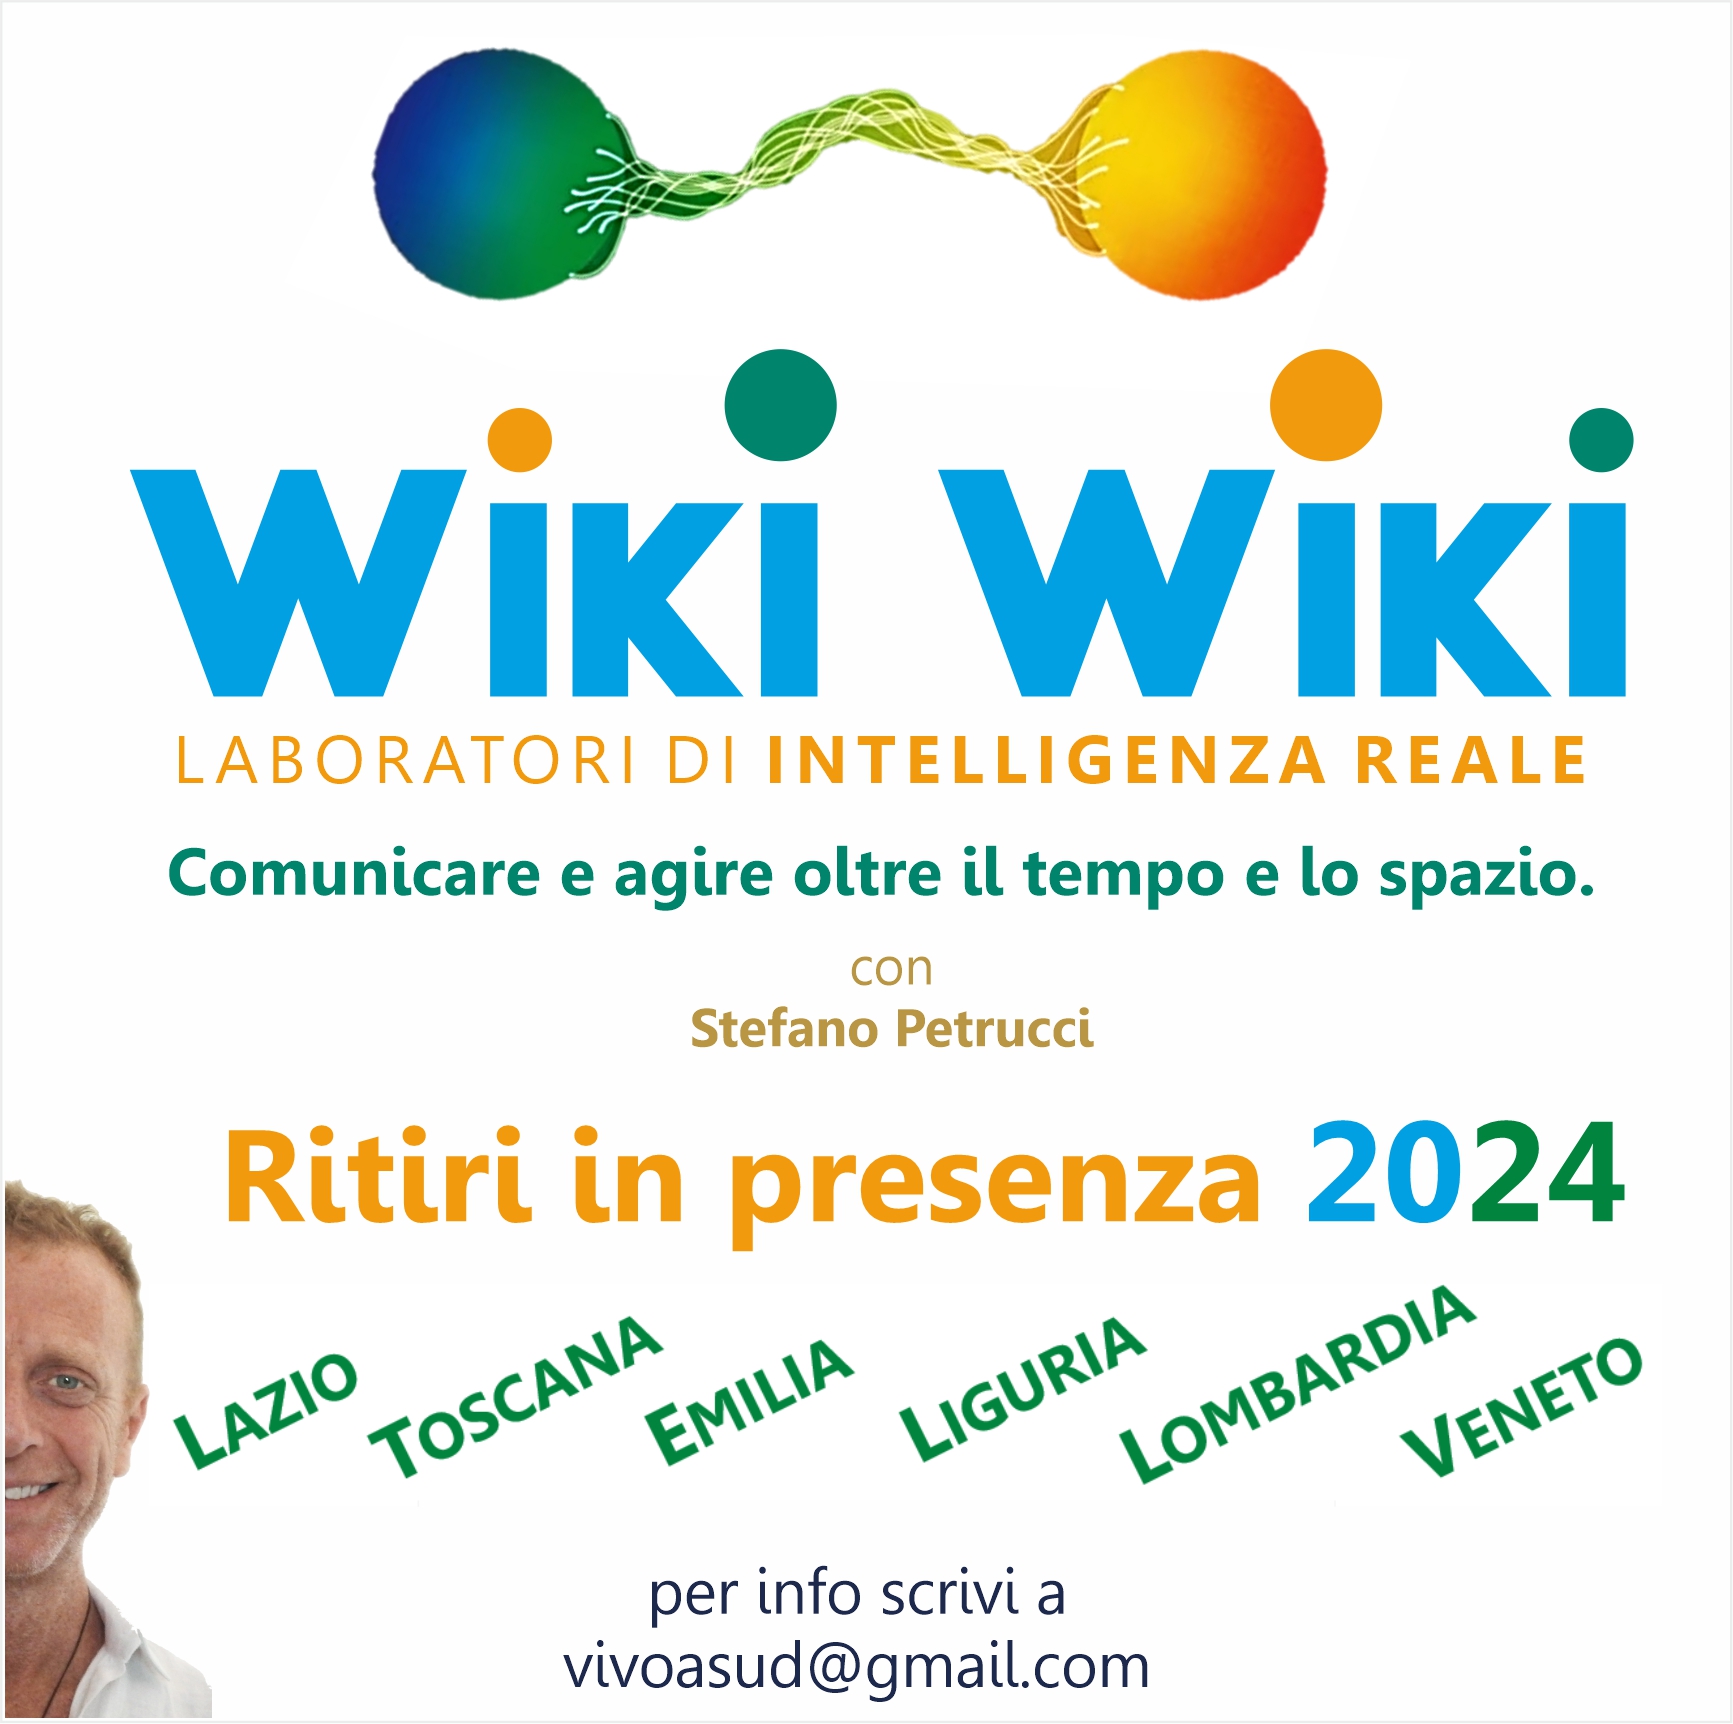 Wiki Wiki – Intensivi in presenza 2024